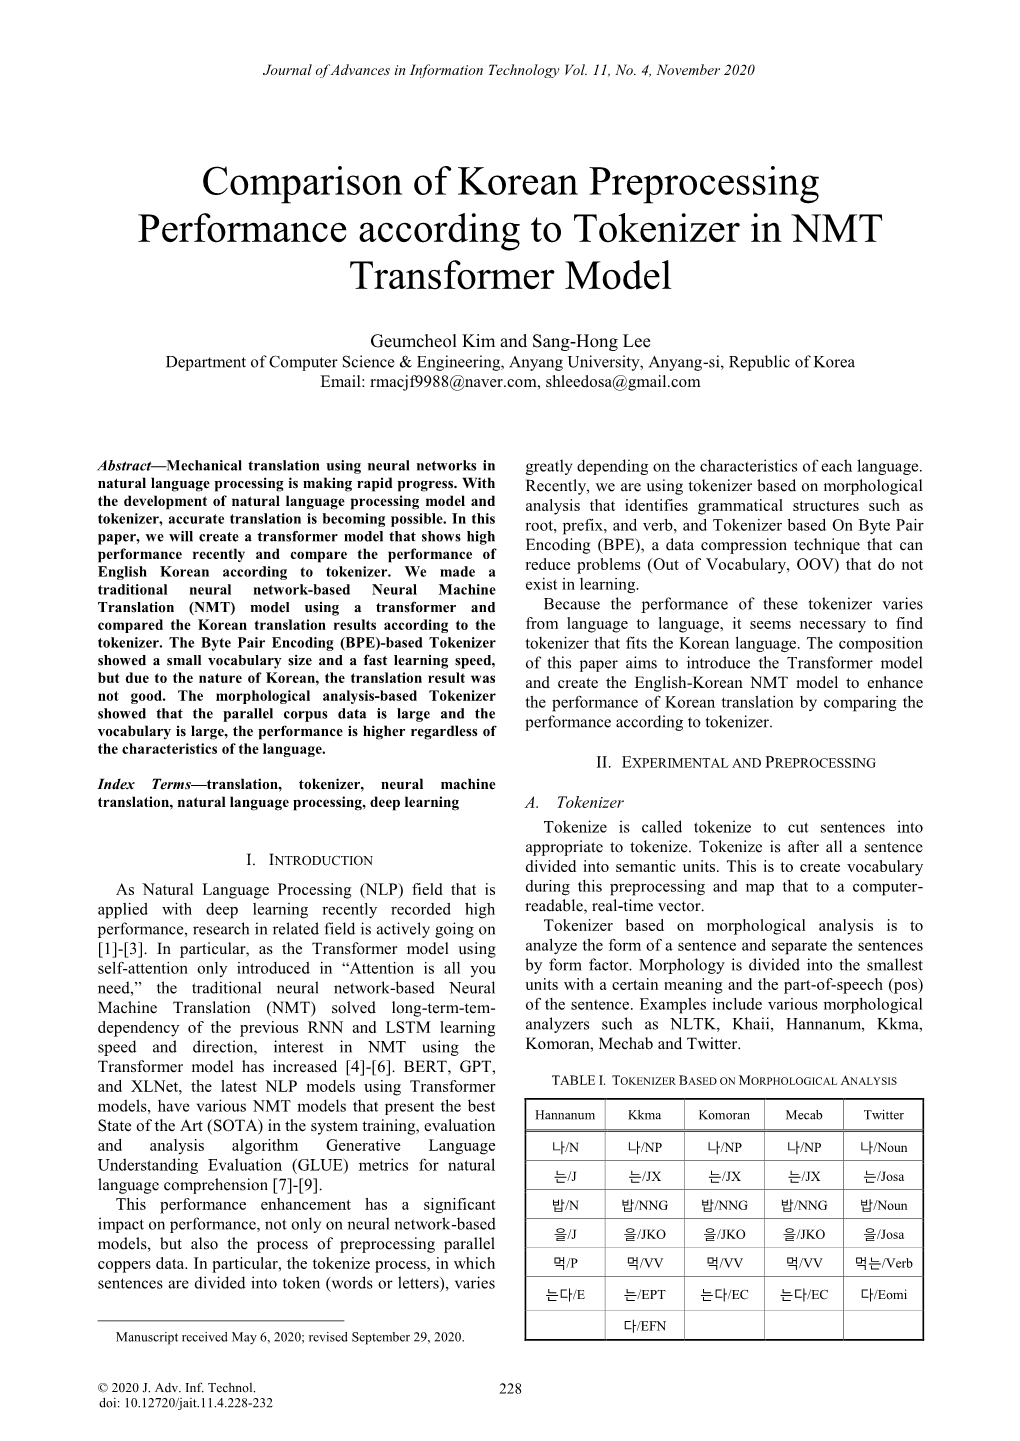 Comparison of Korean Preprocessing Performance According to Tokenizer in NMT Transformer Model